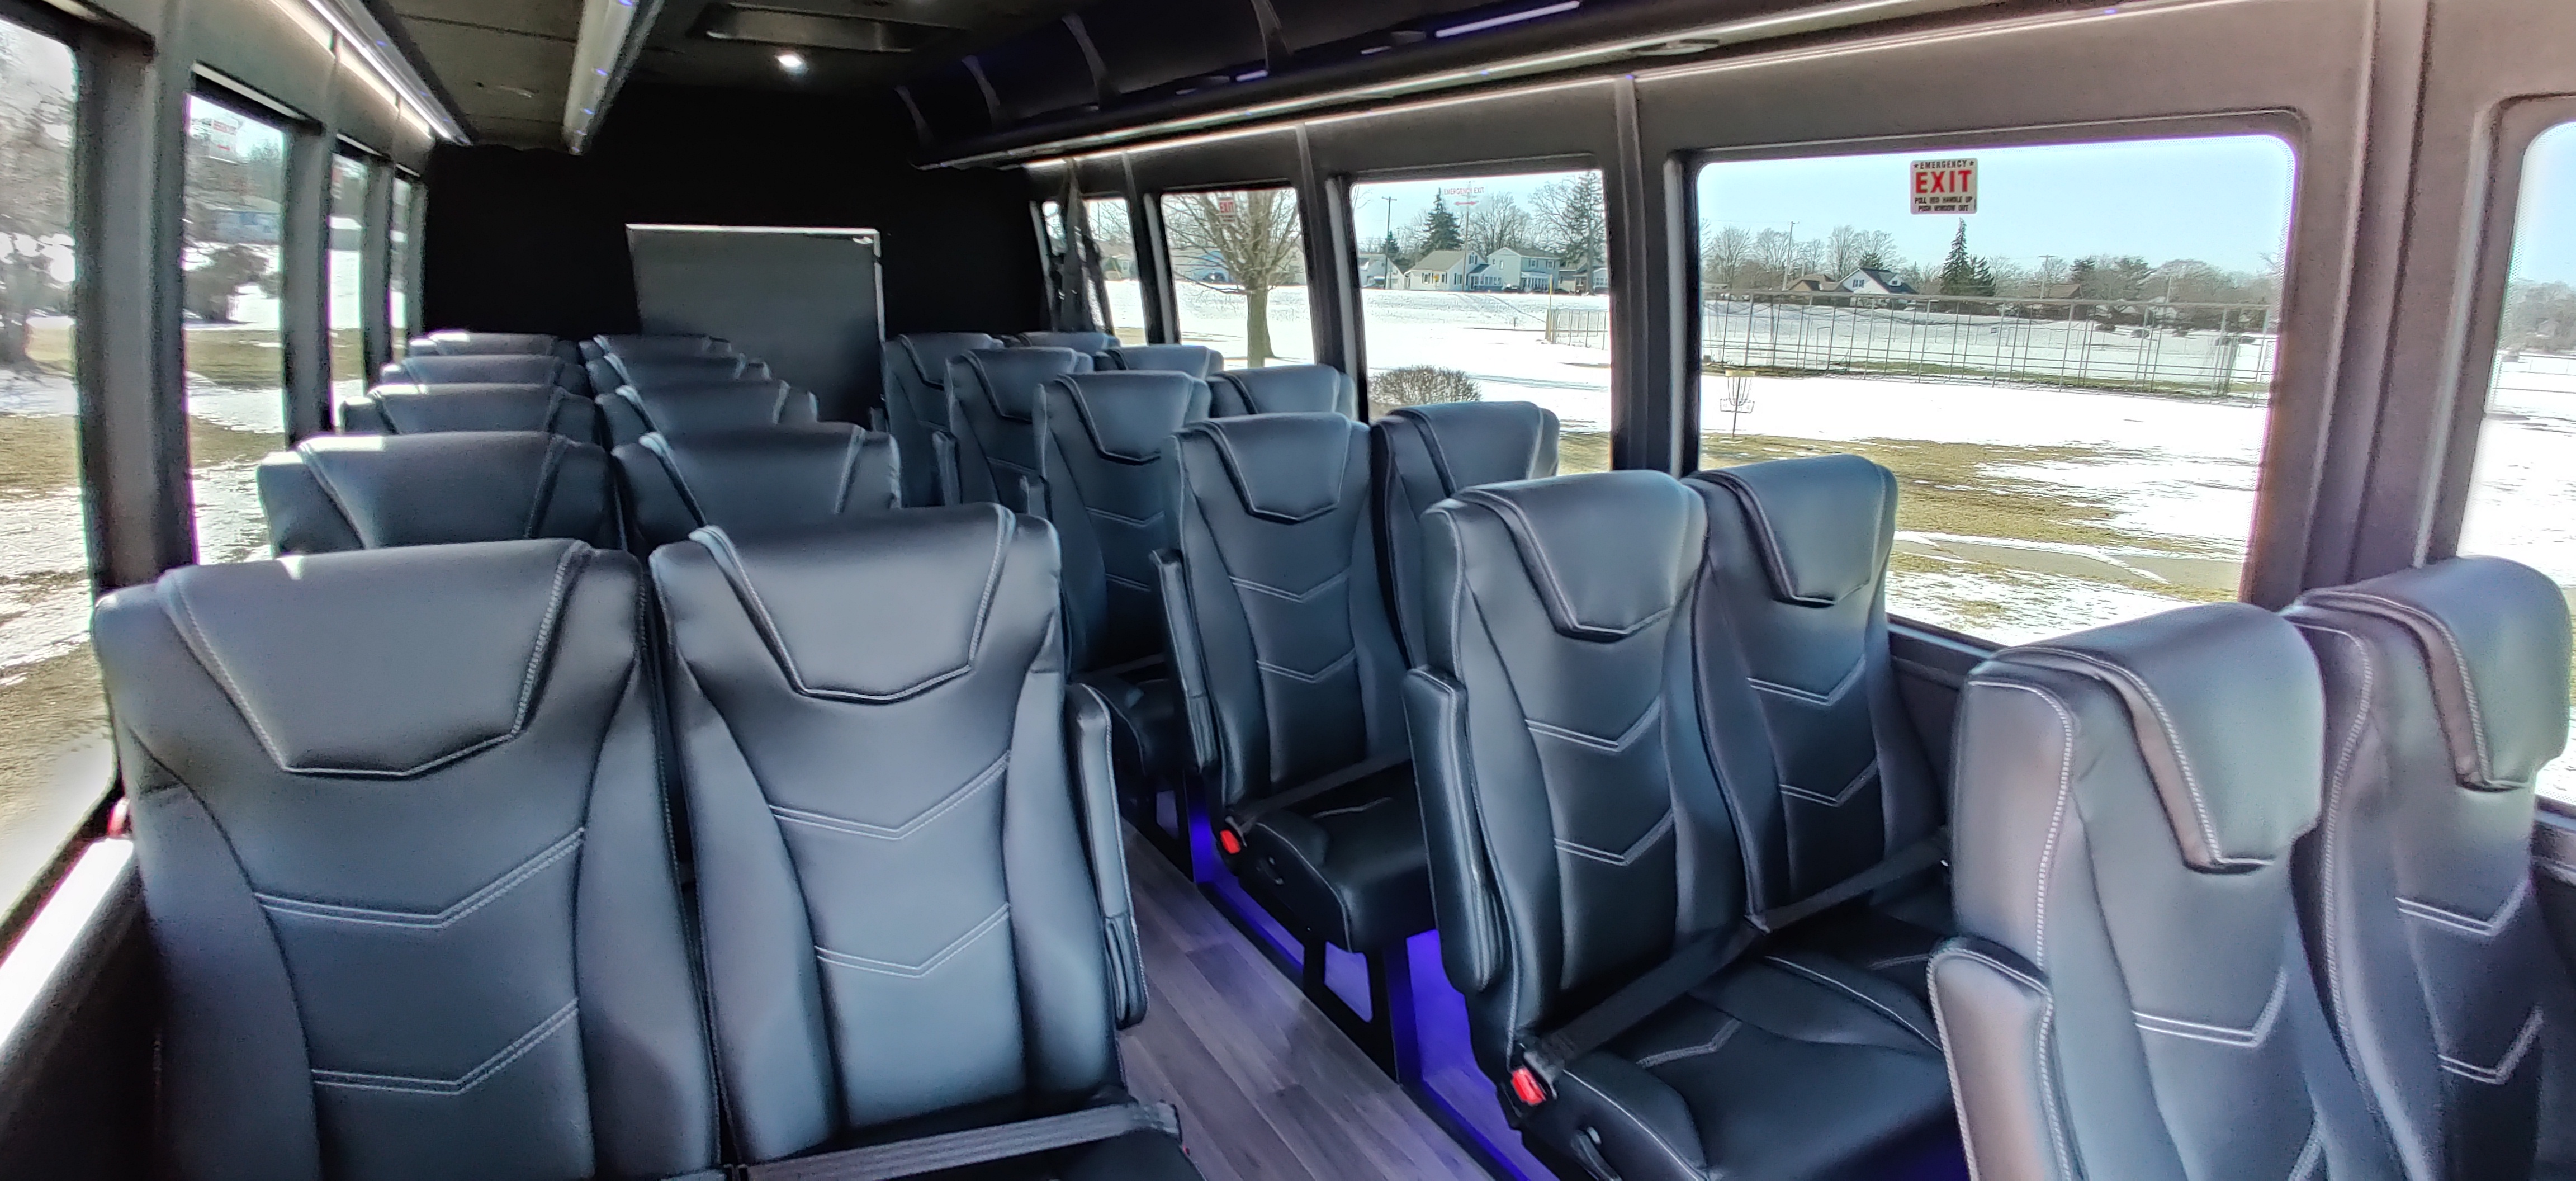 26 Passenger Executive Shuttle Bus Interior 1